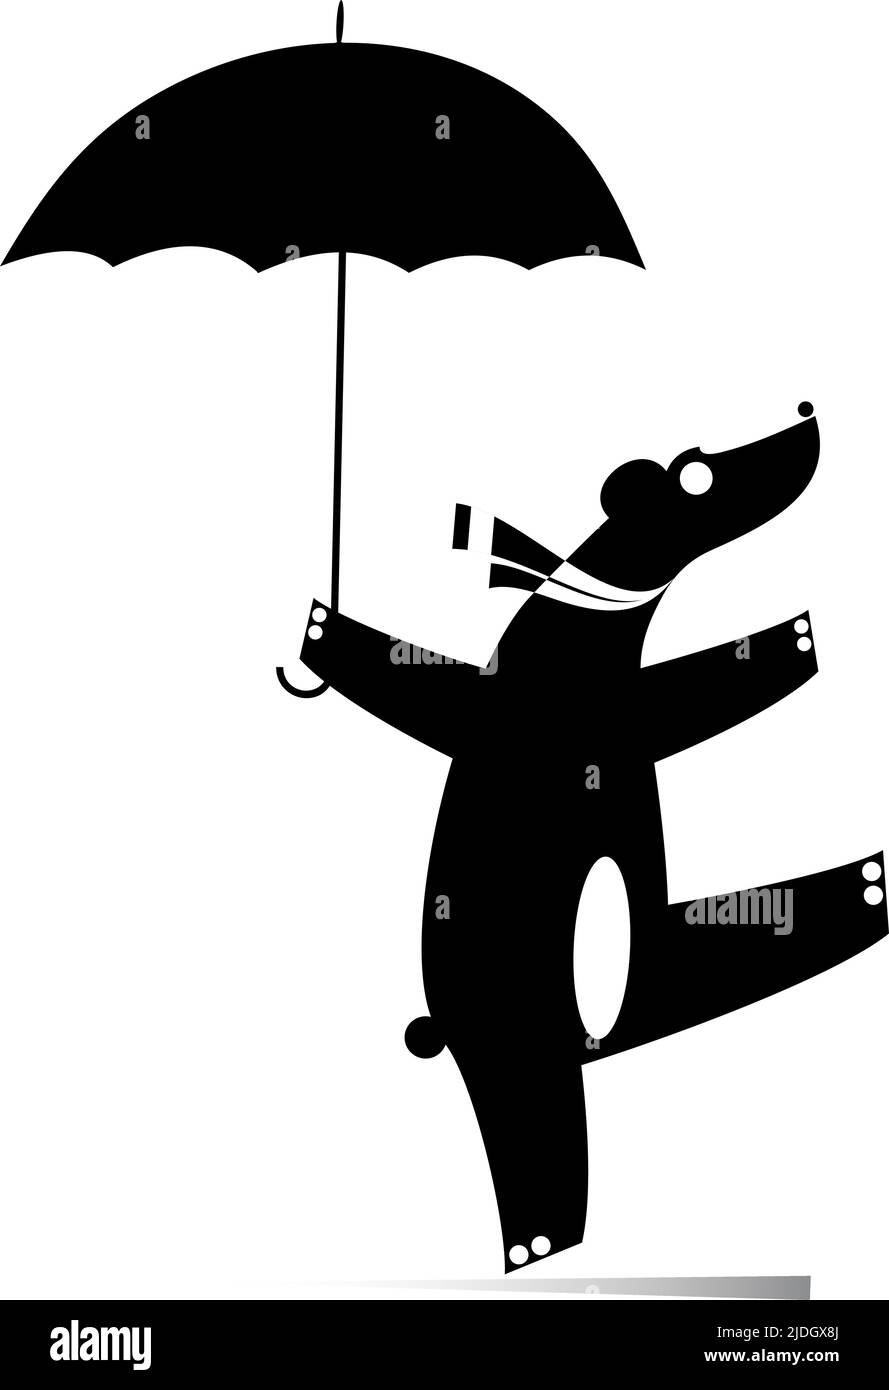 Funny bear with an umbrella illustration.  Rain, funny bear with umbrella. Black and white Stock Vector